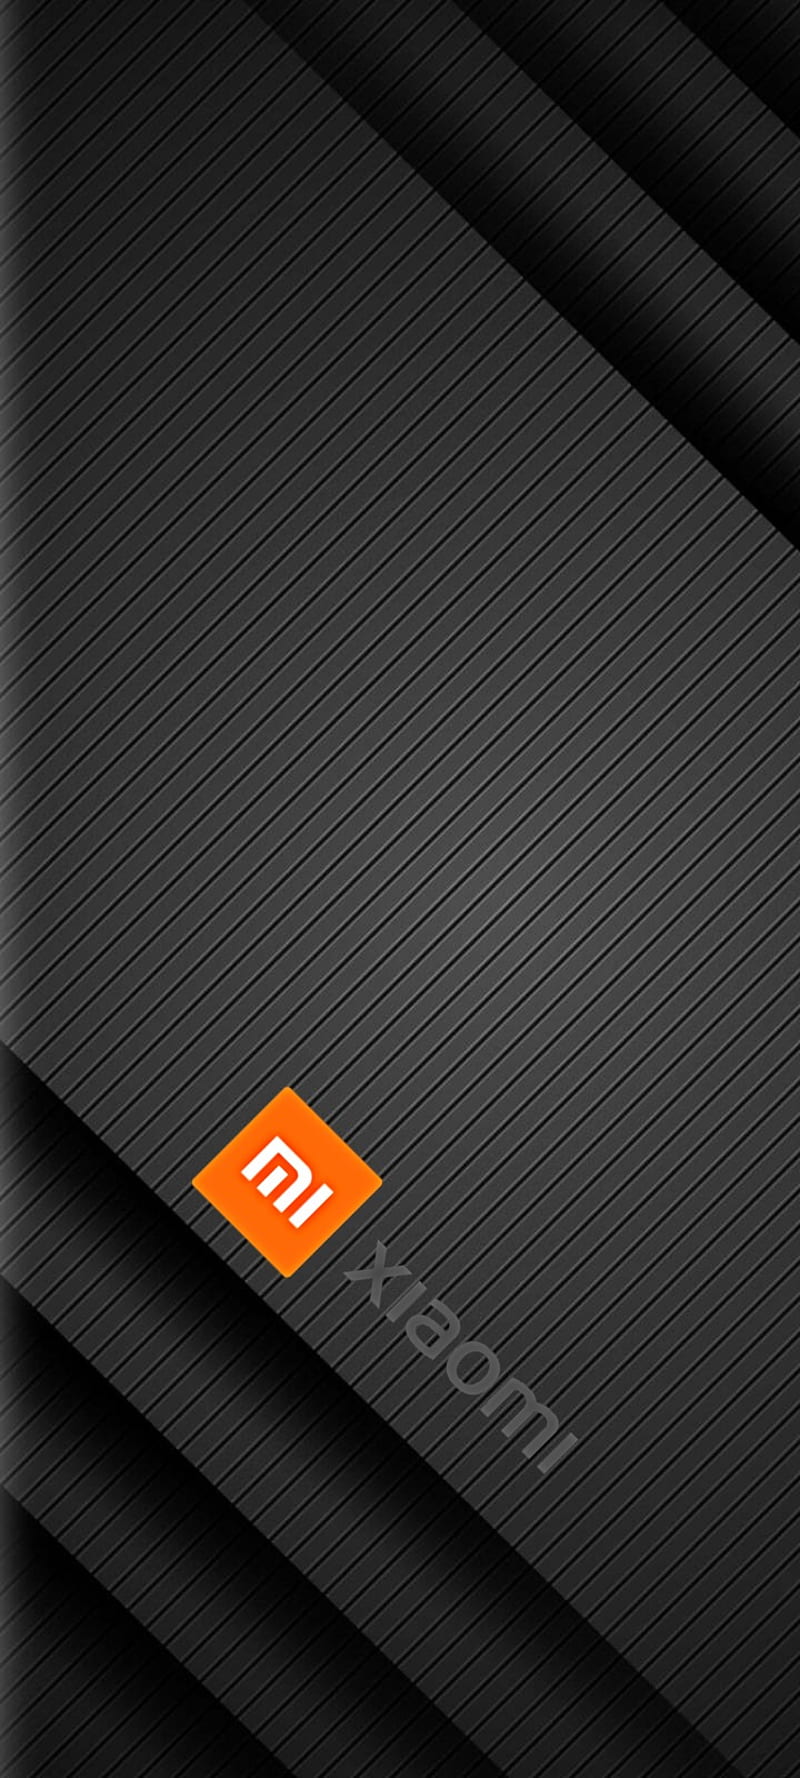 Wallpaper Xiaomi Xiaomi Mi Xiaomi Mi 5 Android Colorfulness Background   Download Free Image